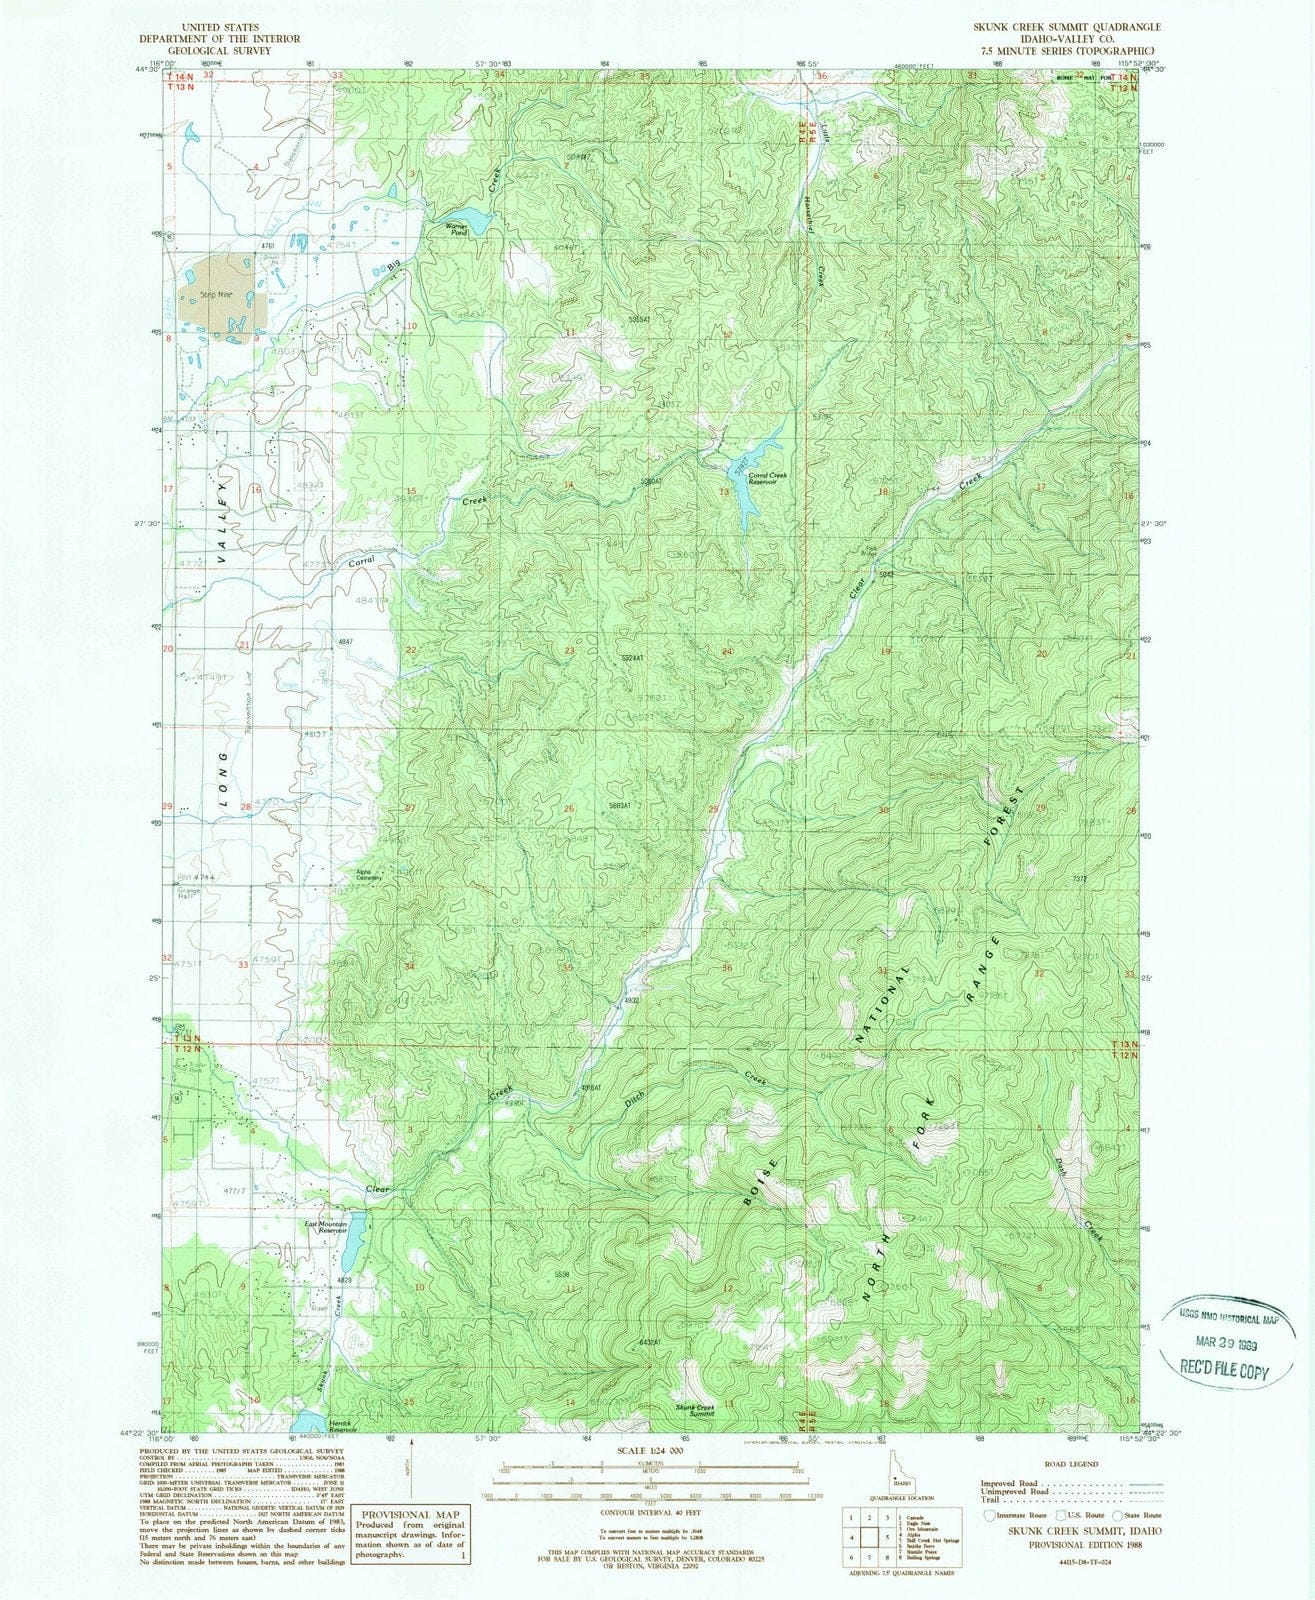 1988 Skunk Creek Summit, ID - Idaho - USGS Topographic Map